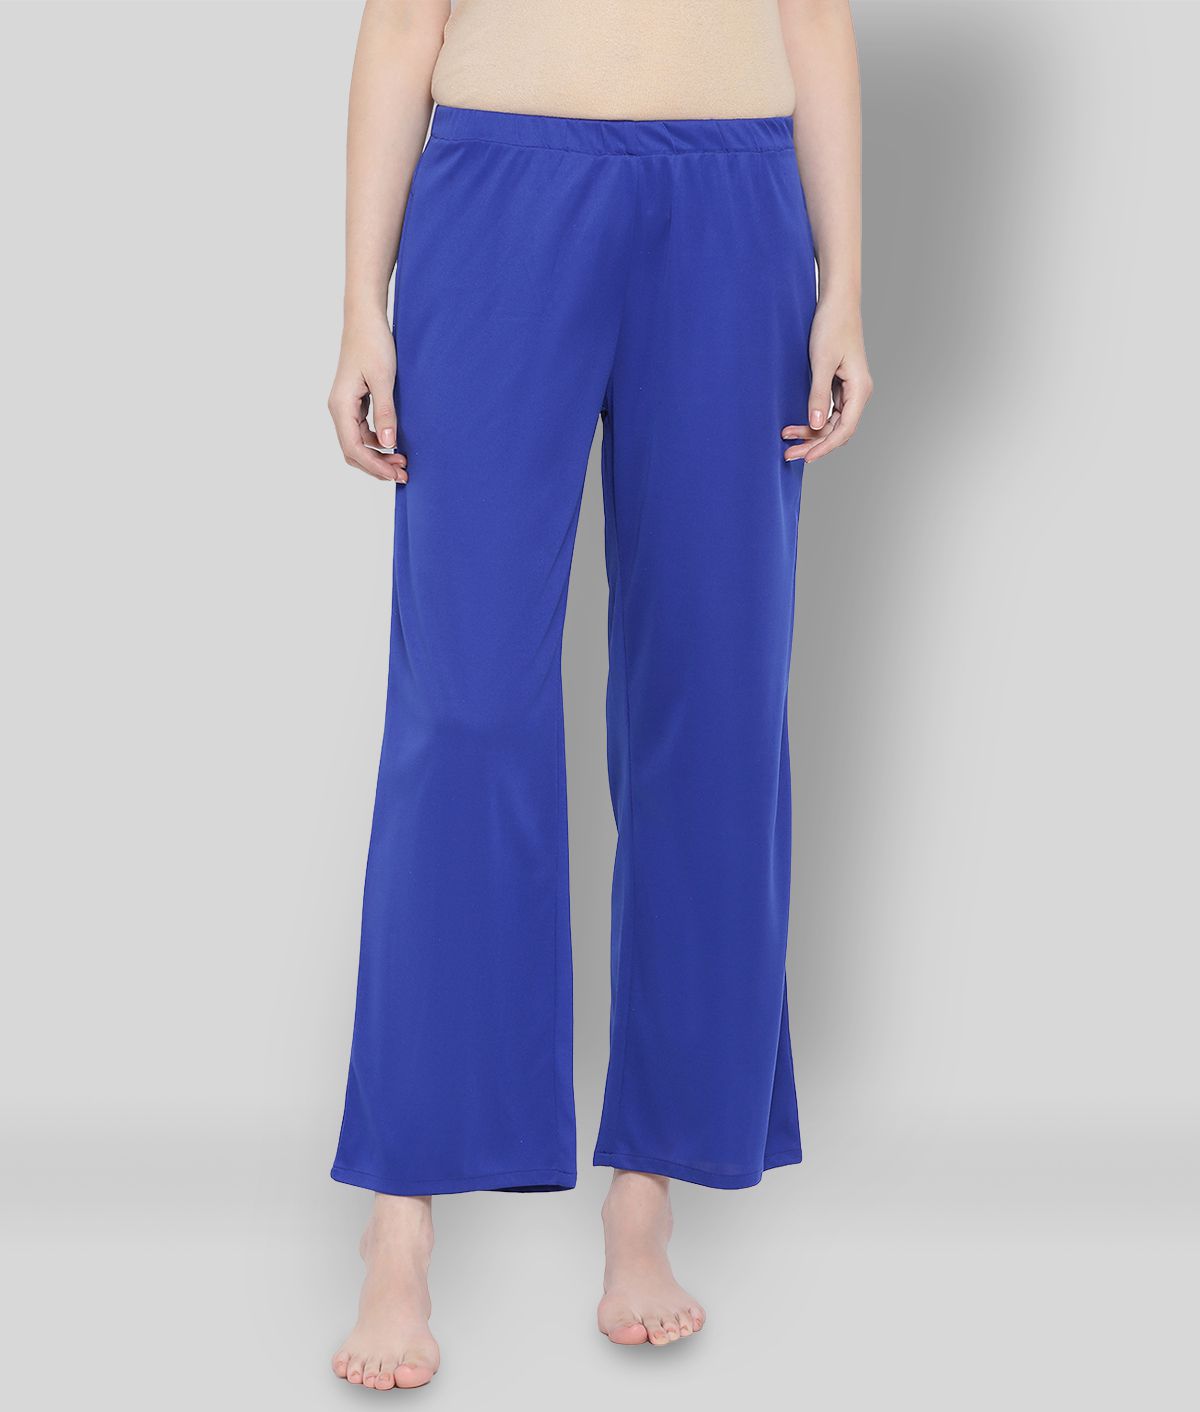     			Clovia - Blue Cotton Women's Nightwear Pyjama ( Pack of 1 )